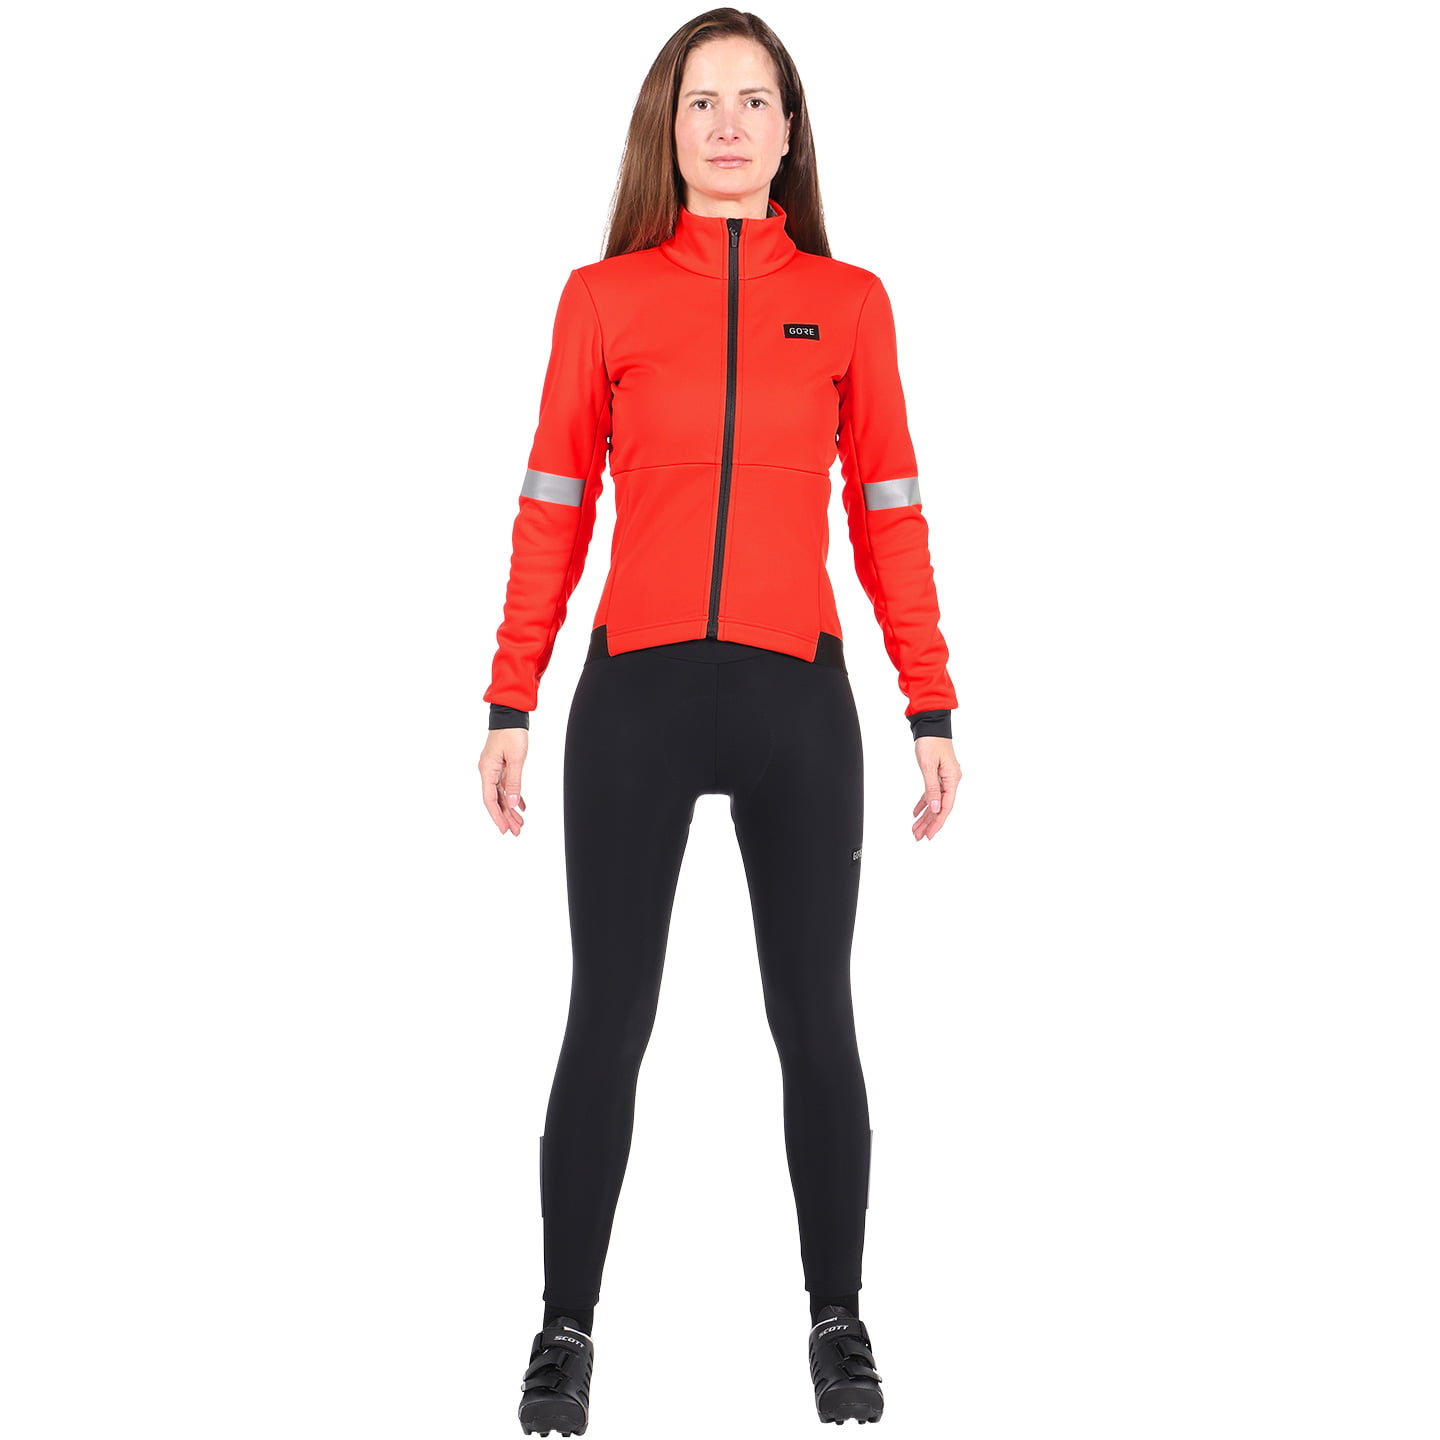 GORE WEAR Tempest Women’s Set (winter jacket + cycling tights) Women’s Set (2 pieces)